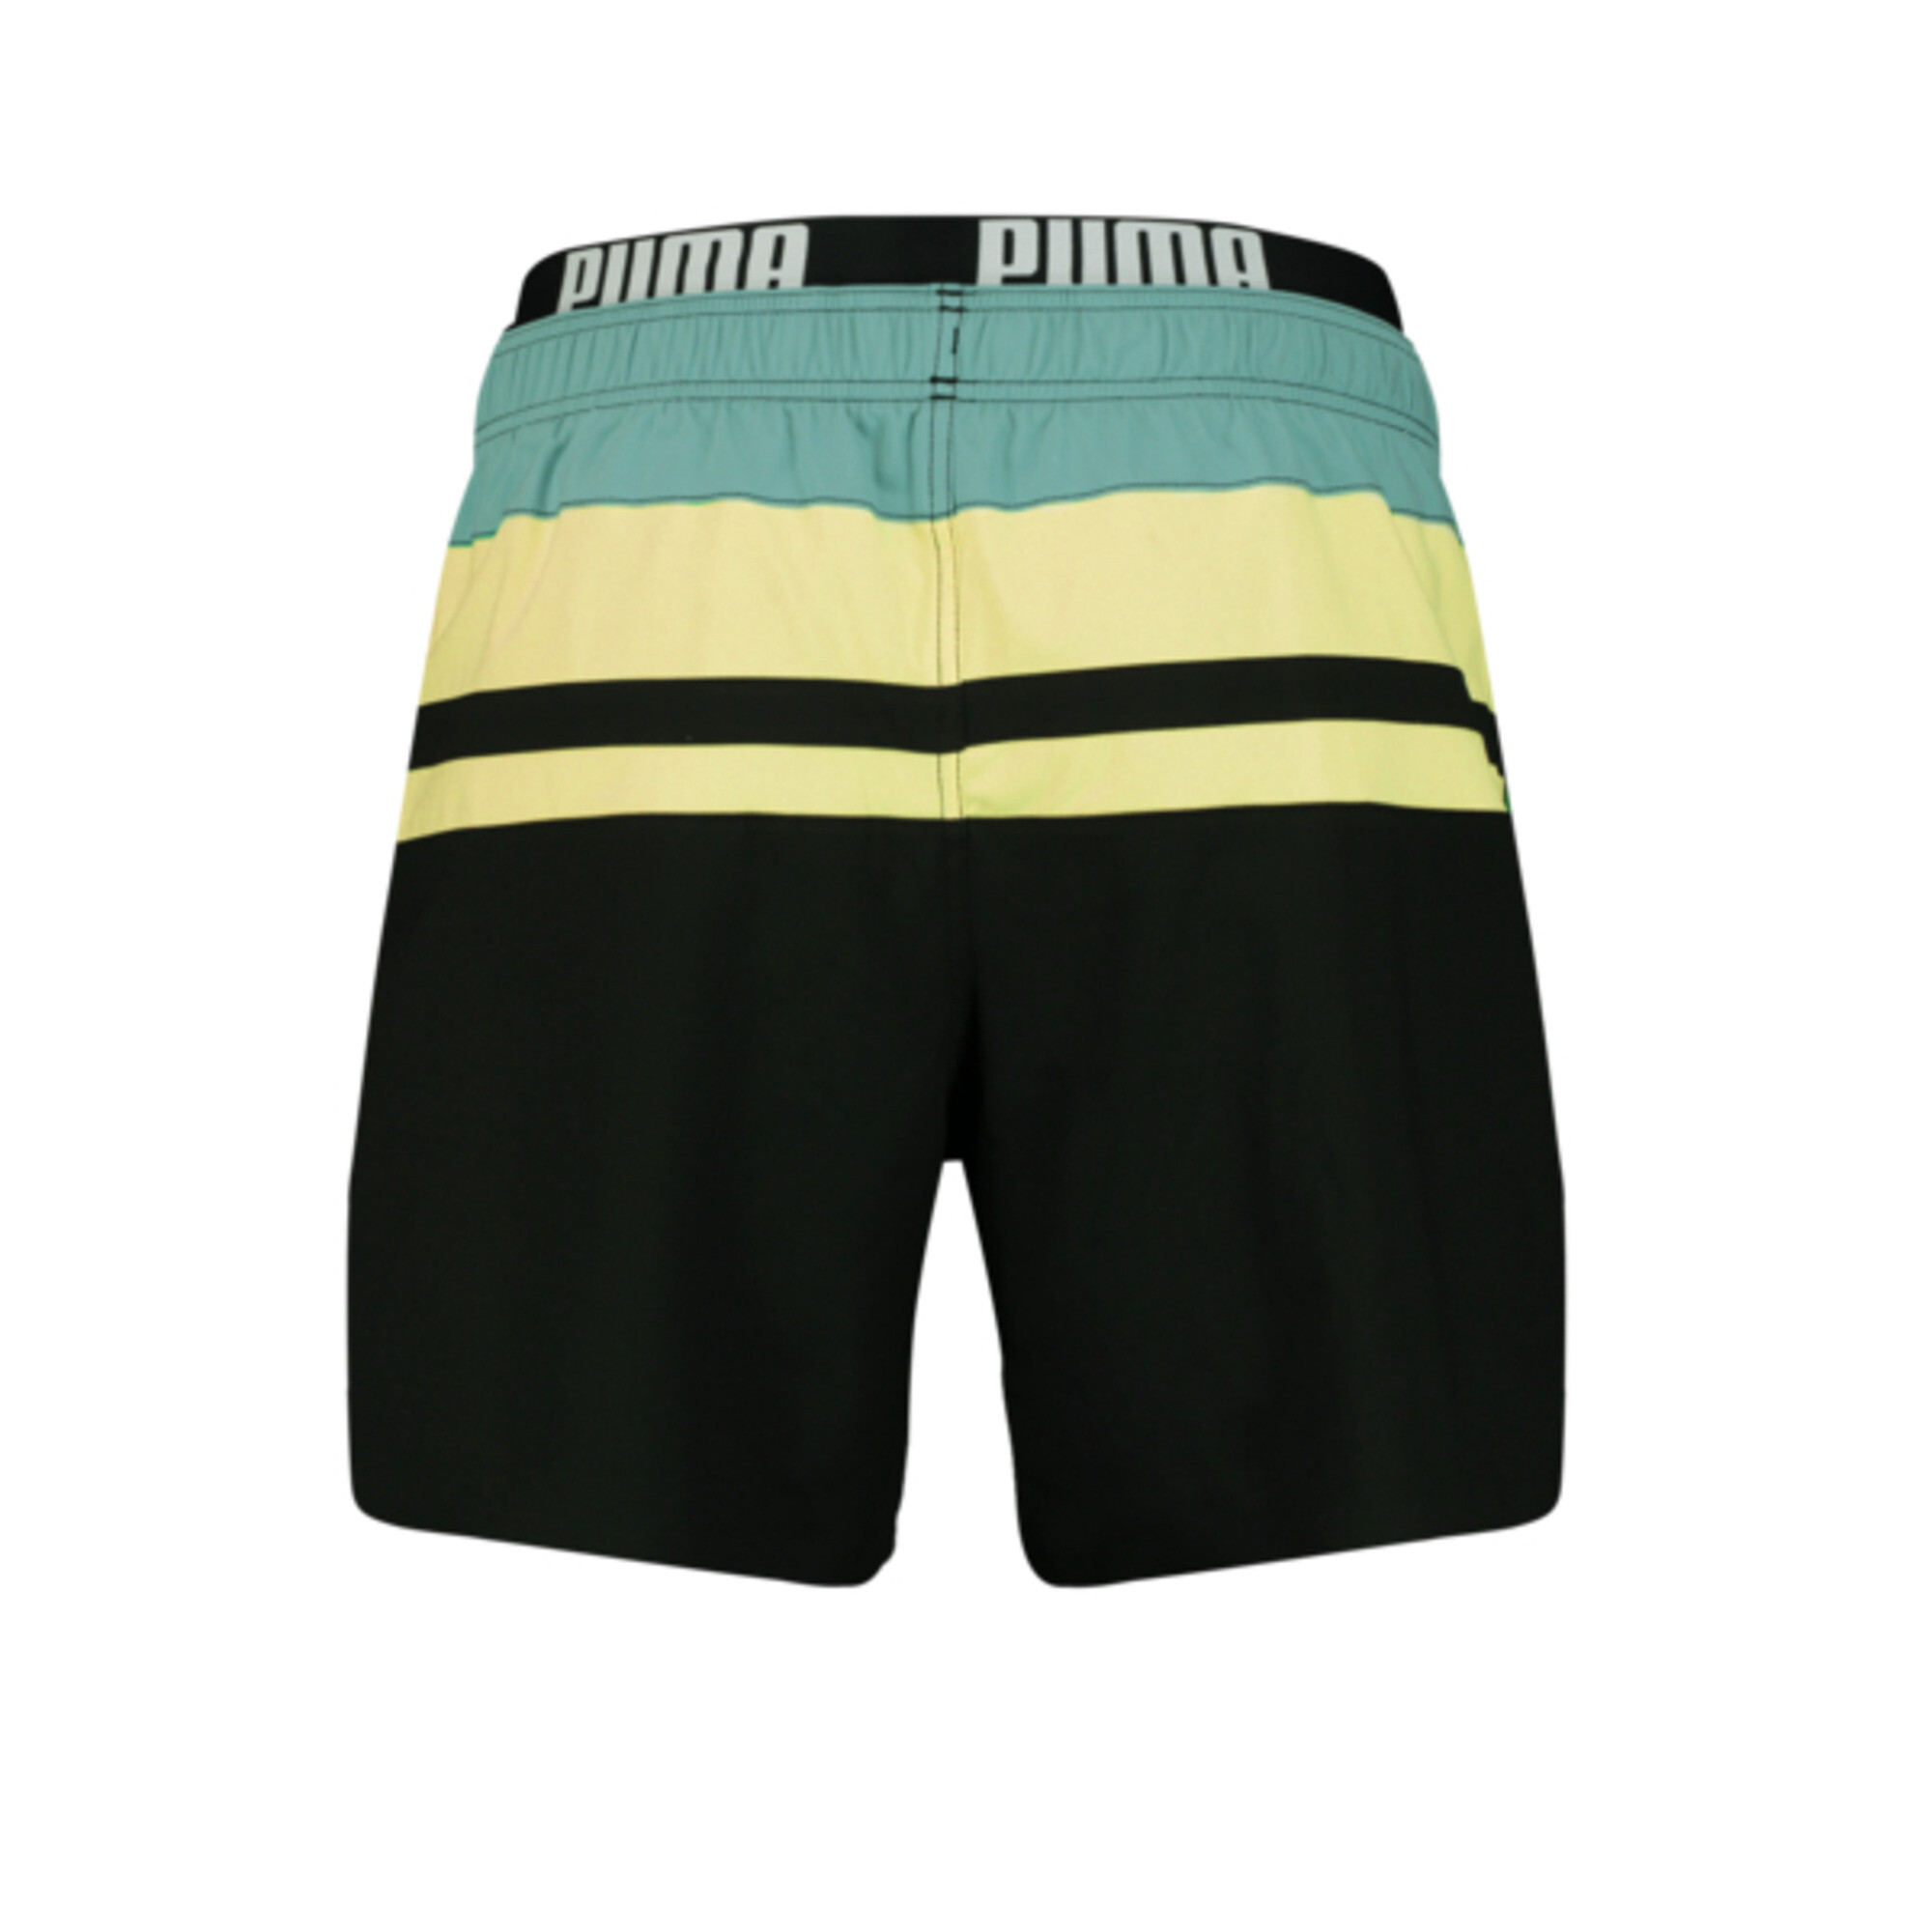 Men's PUMA Swim Heritage Stripe Mid-Length Shorts In Sea Green, Size Small